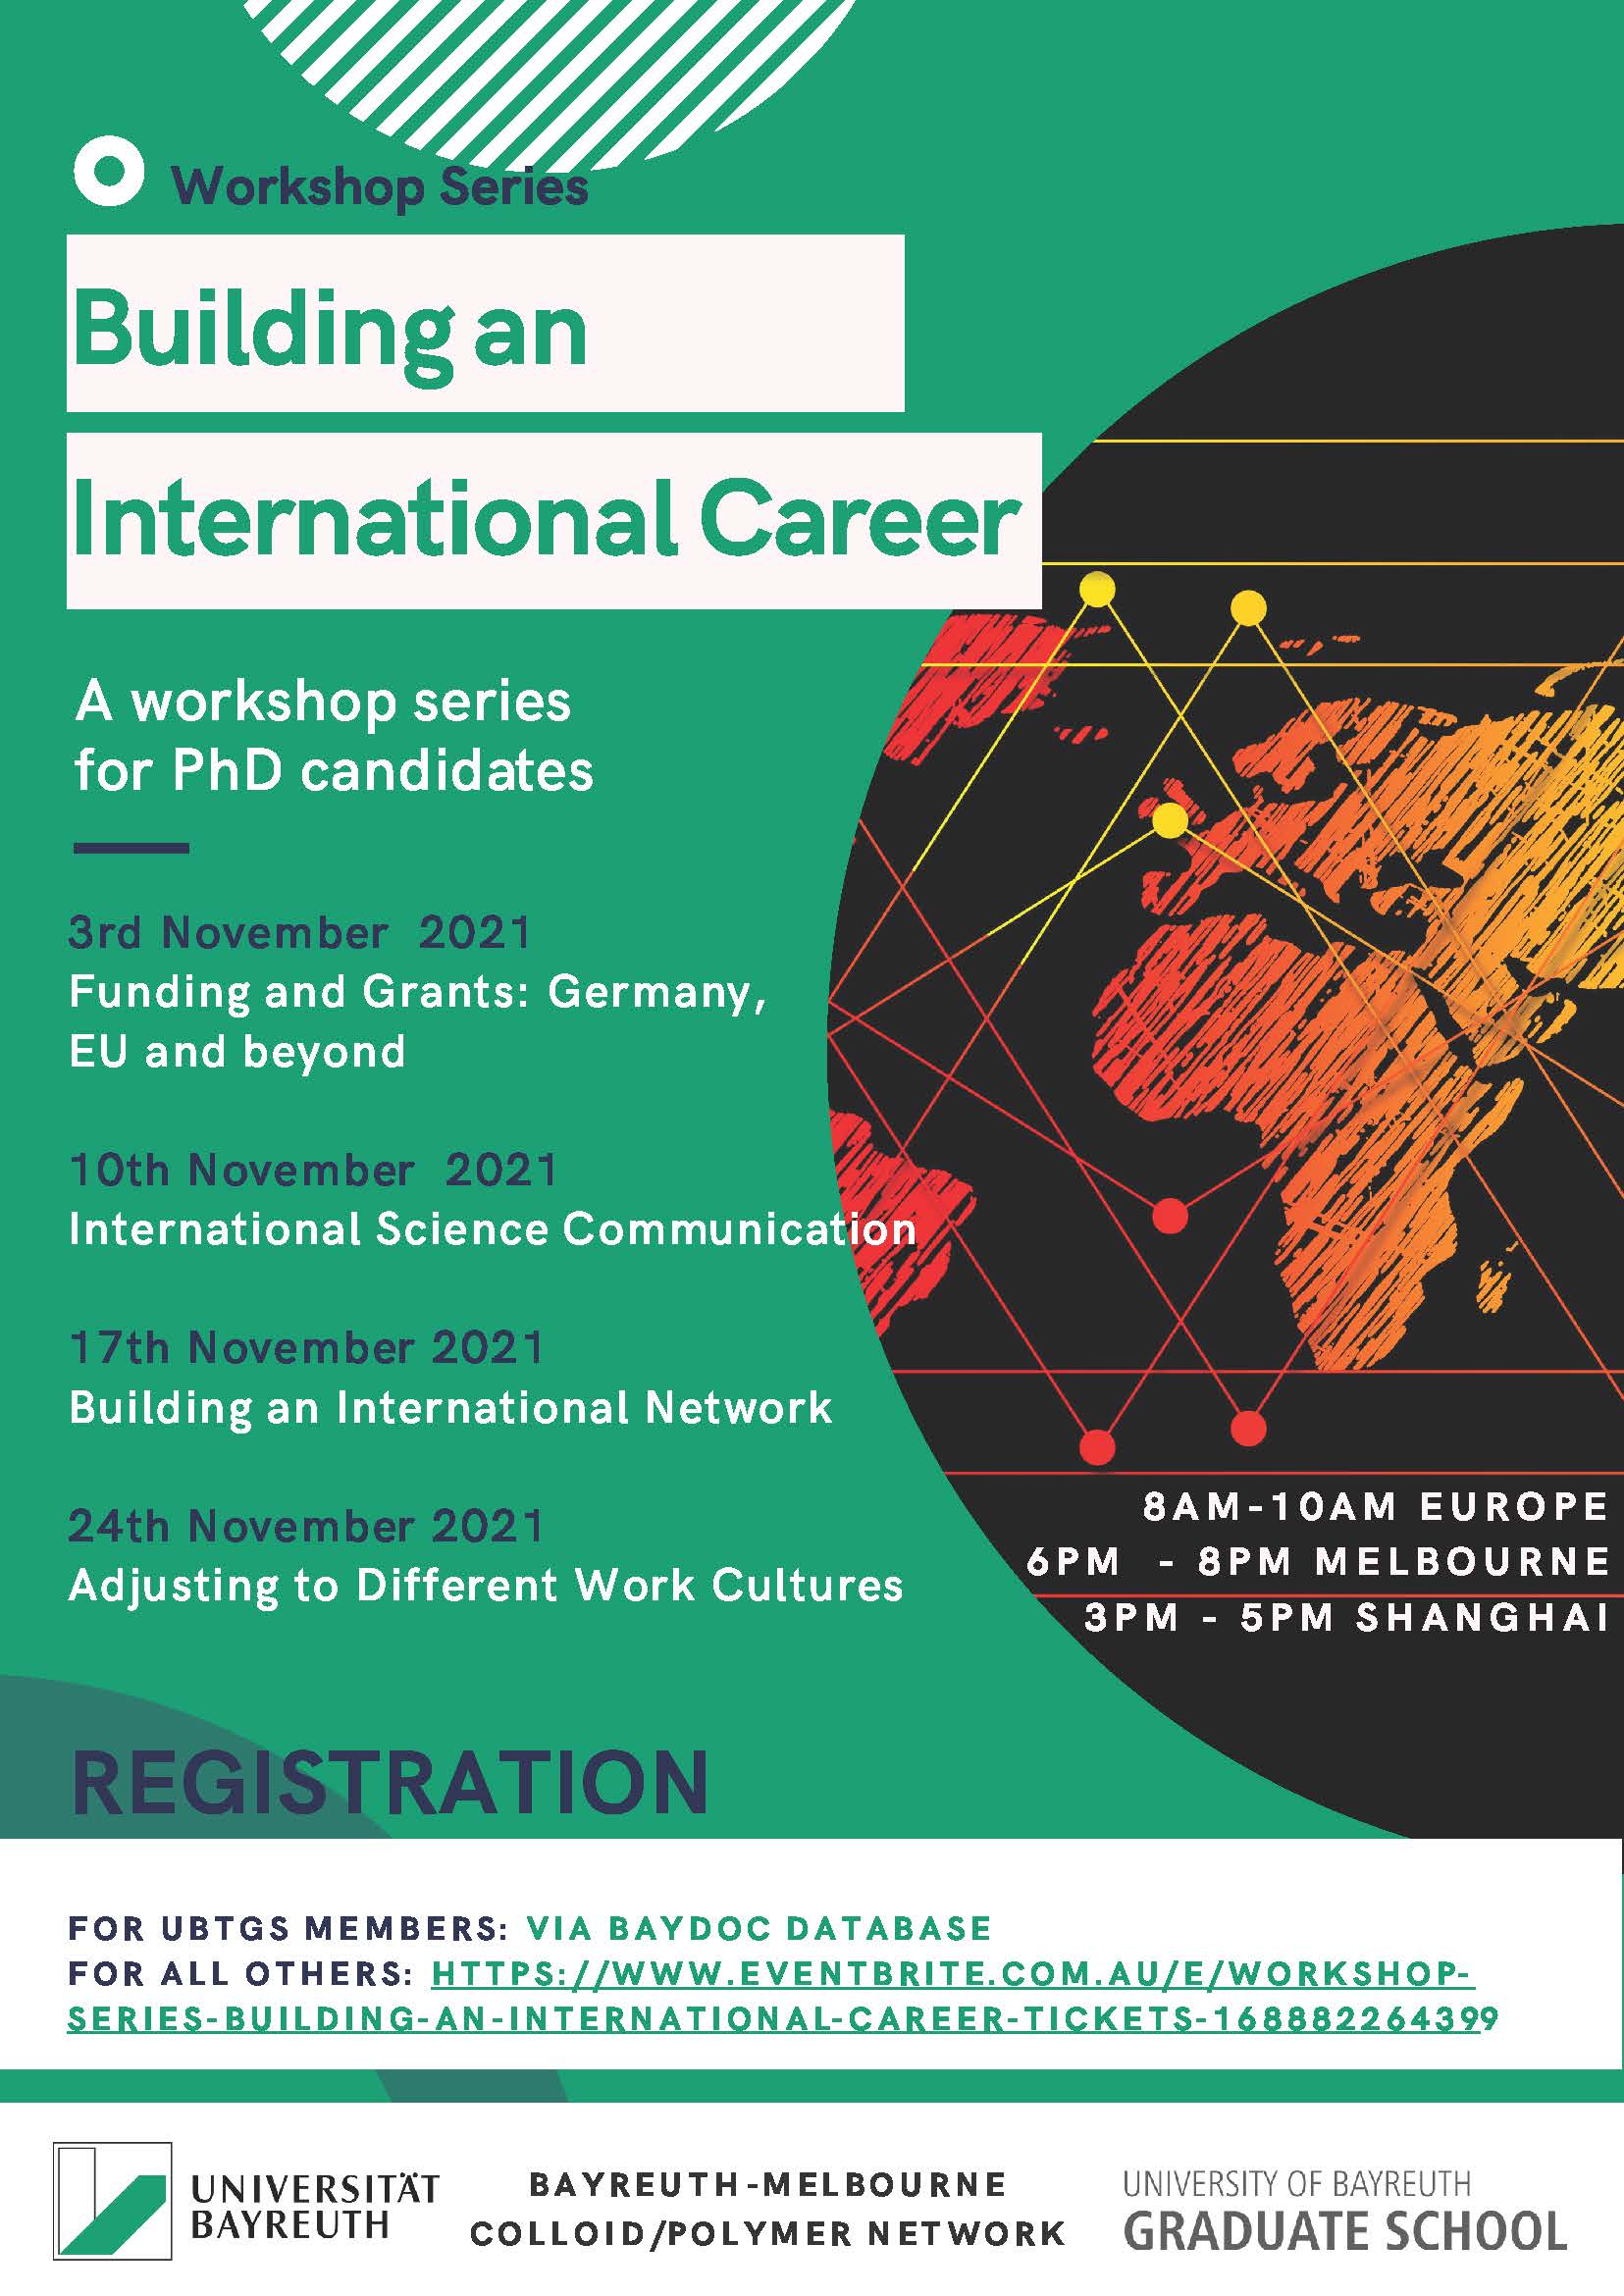 Workshop Series for PhDs_Building an international Career